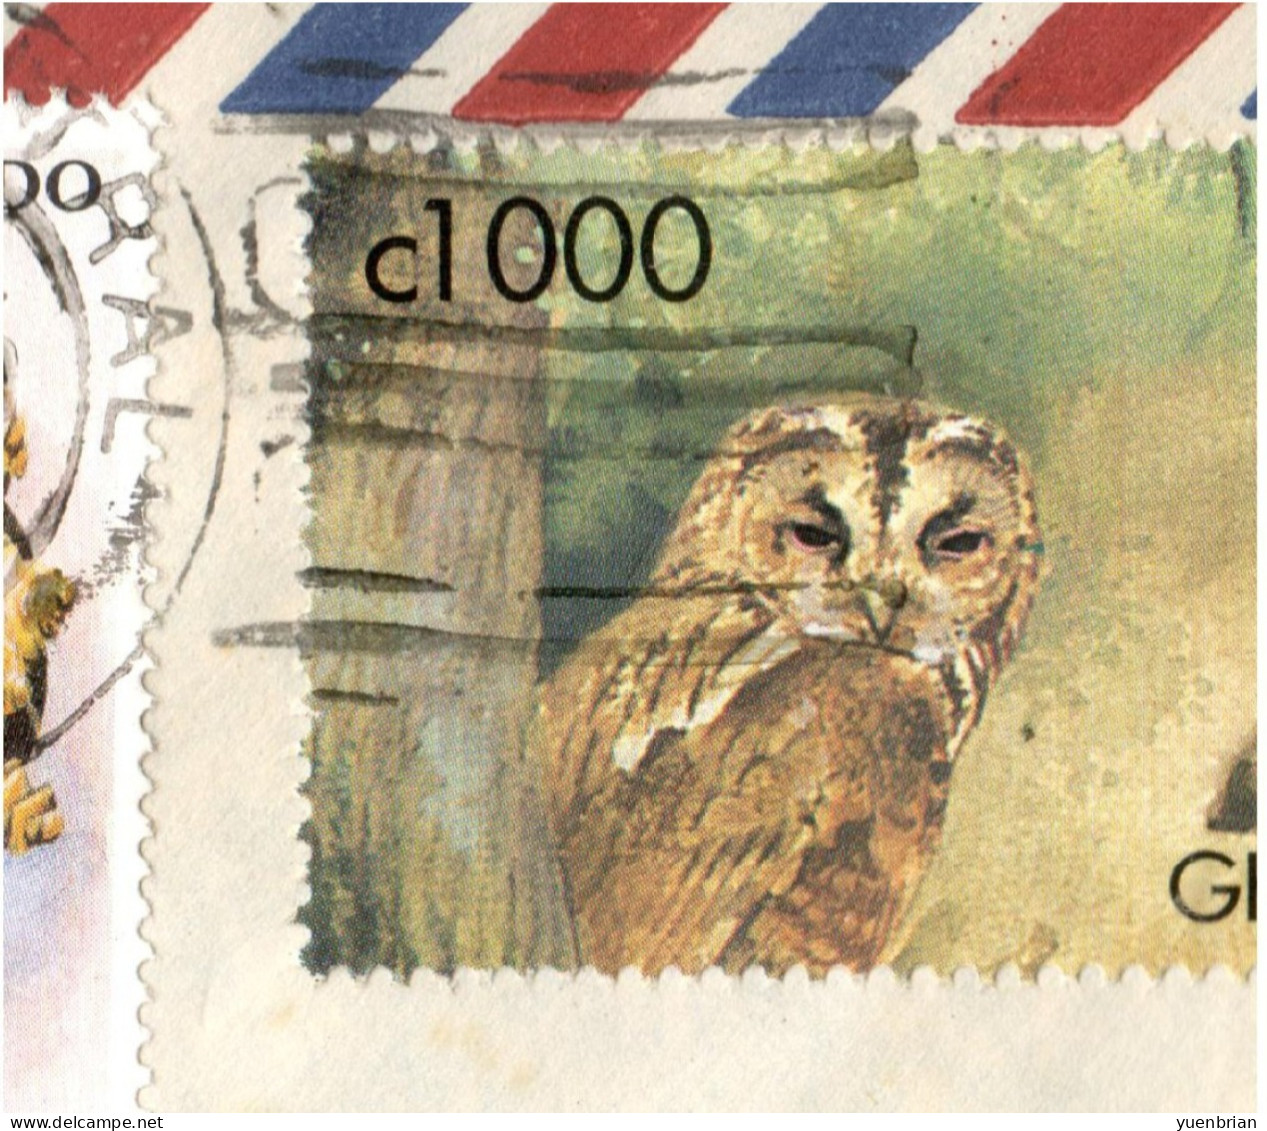 Ghana, Bird, Birds, Owl, Circulated Cover To Germany - Owls